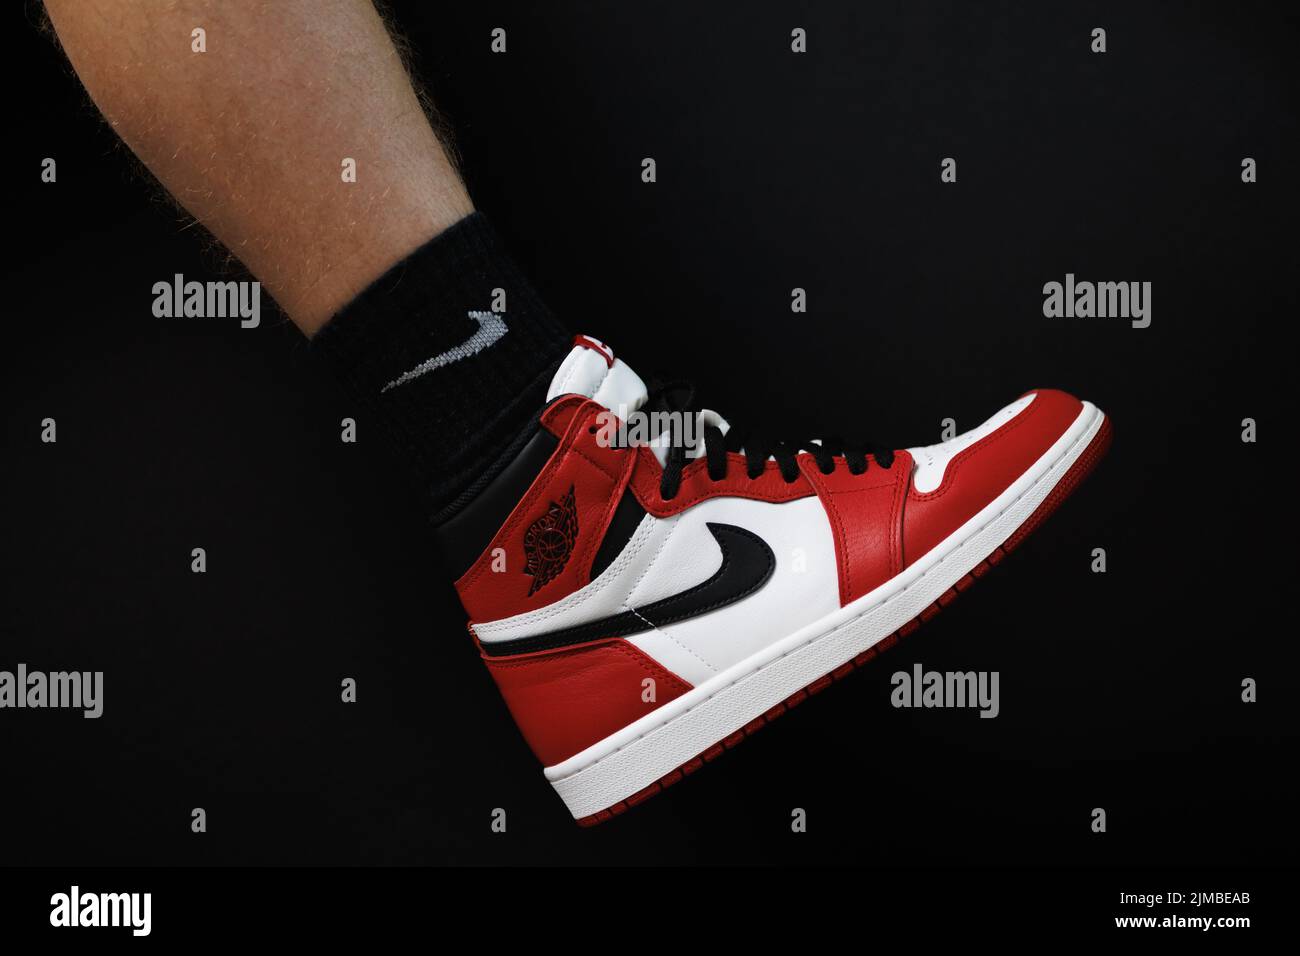 Nike air jordan 1 hi-res stock photography and images - Alamy